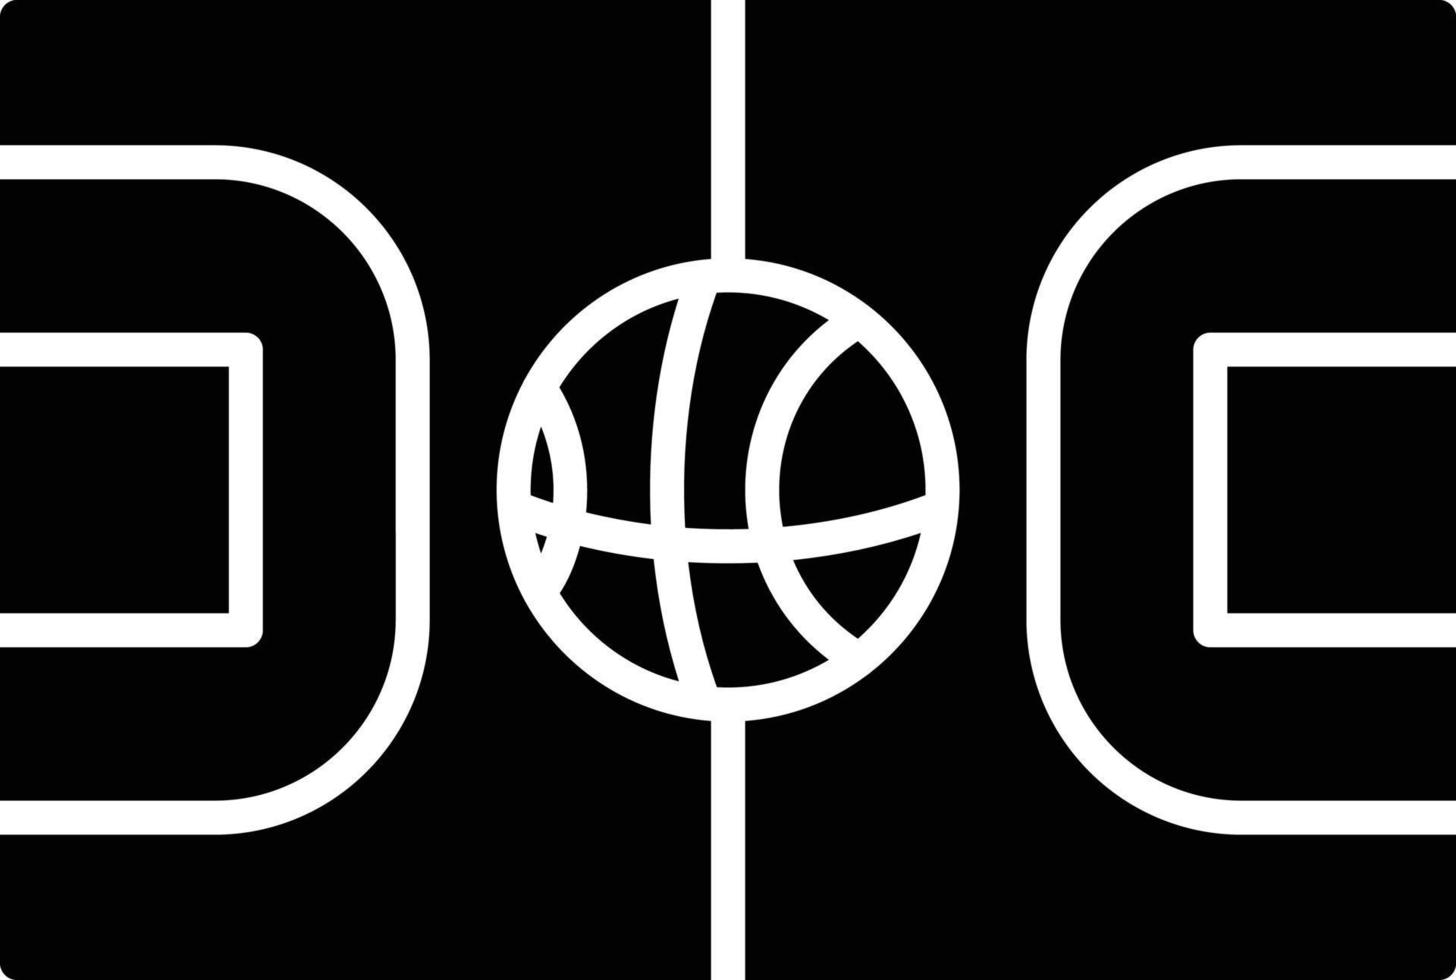 diseño de icono creativo de cancha de baloncesto vector